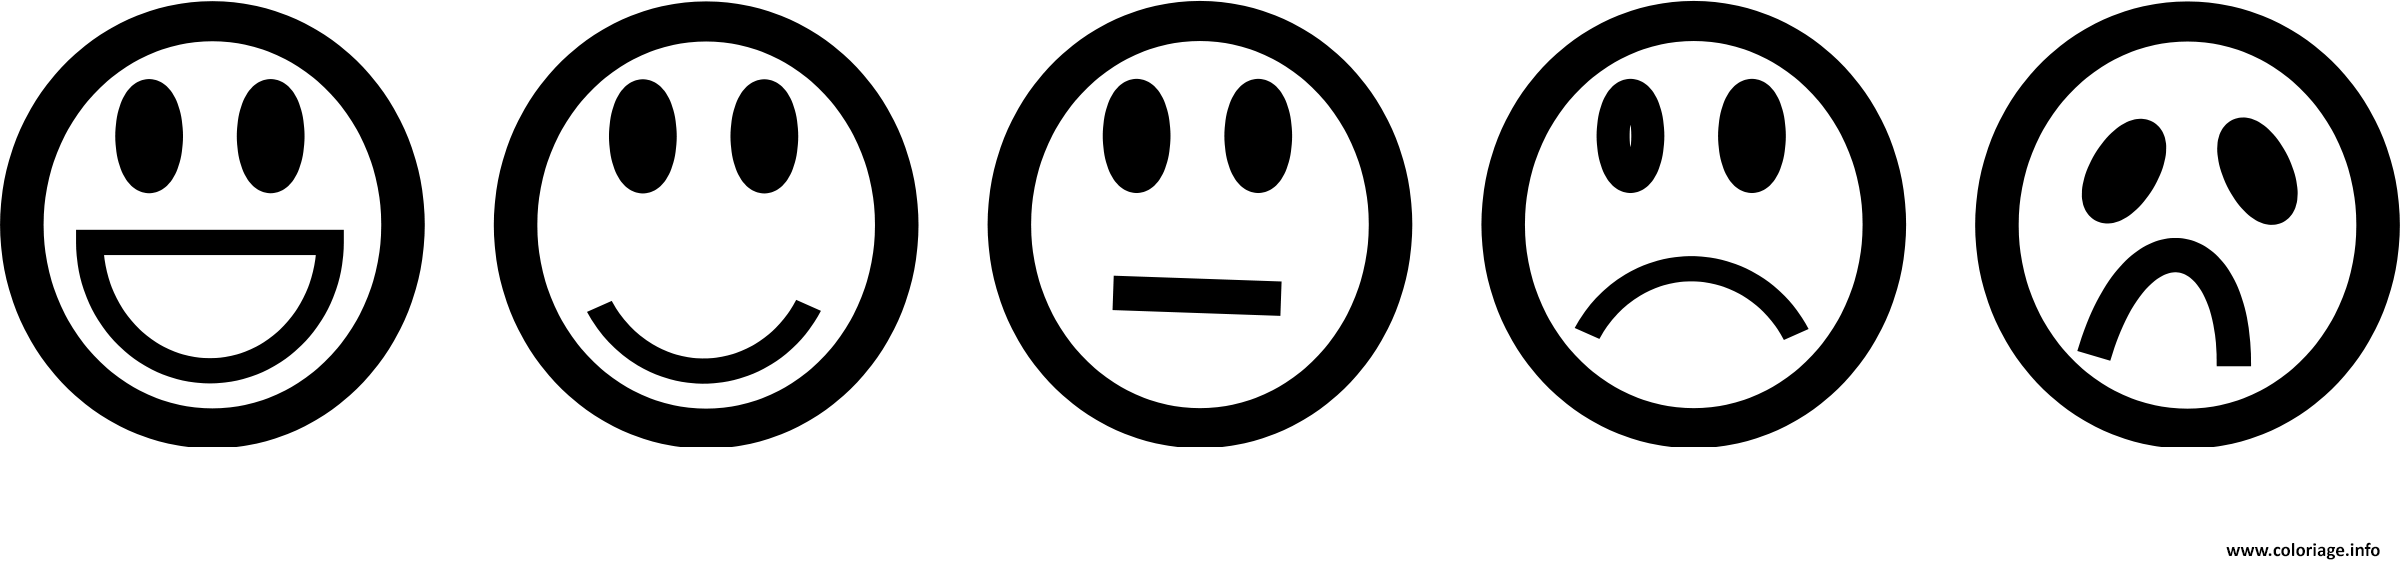 Coloriage Emoji List Sourire Triste Happy Dessin   Imprimer